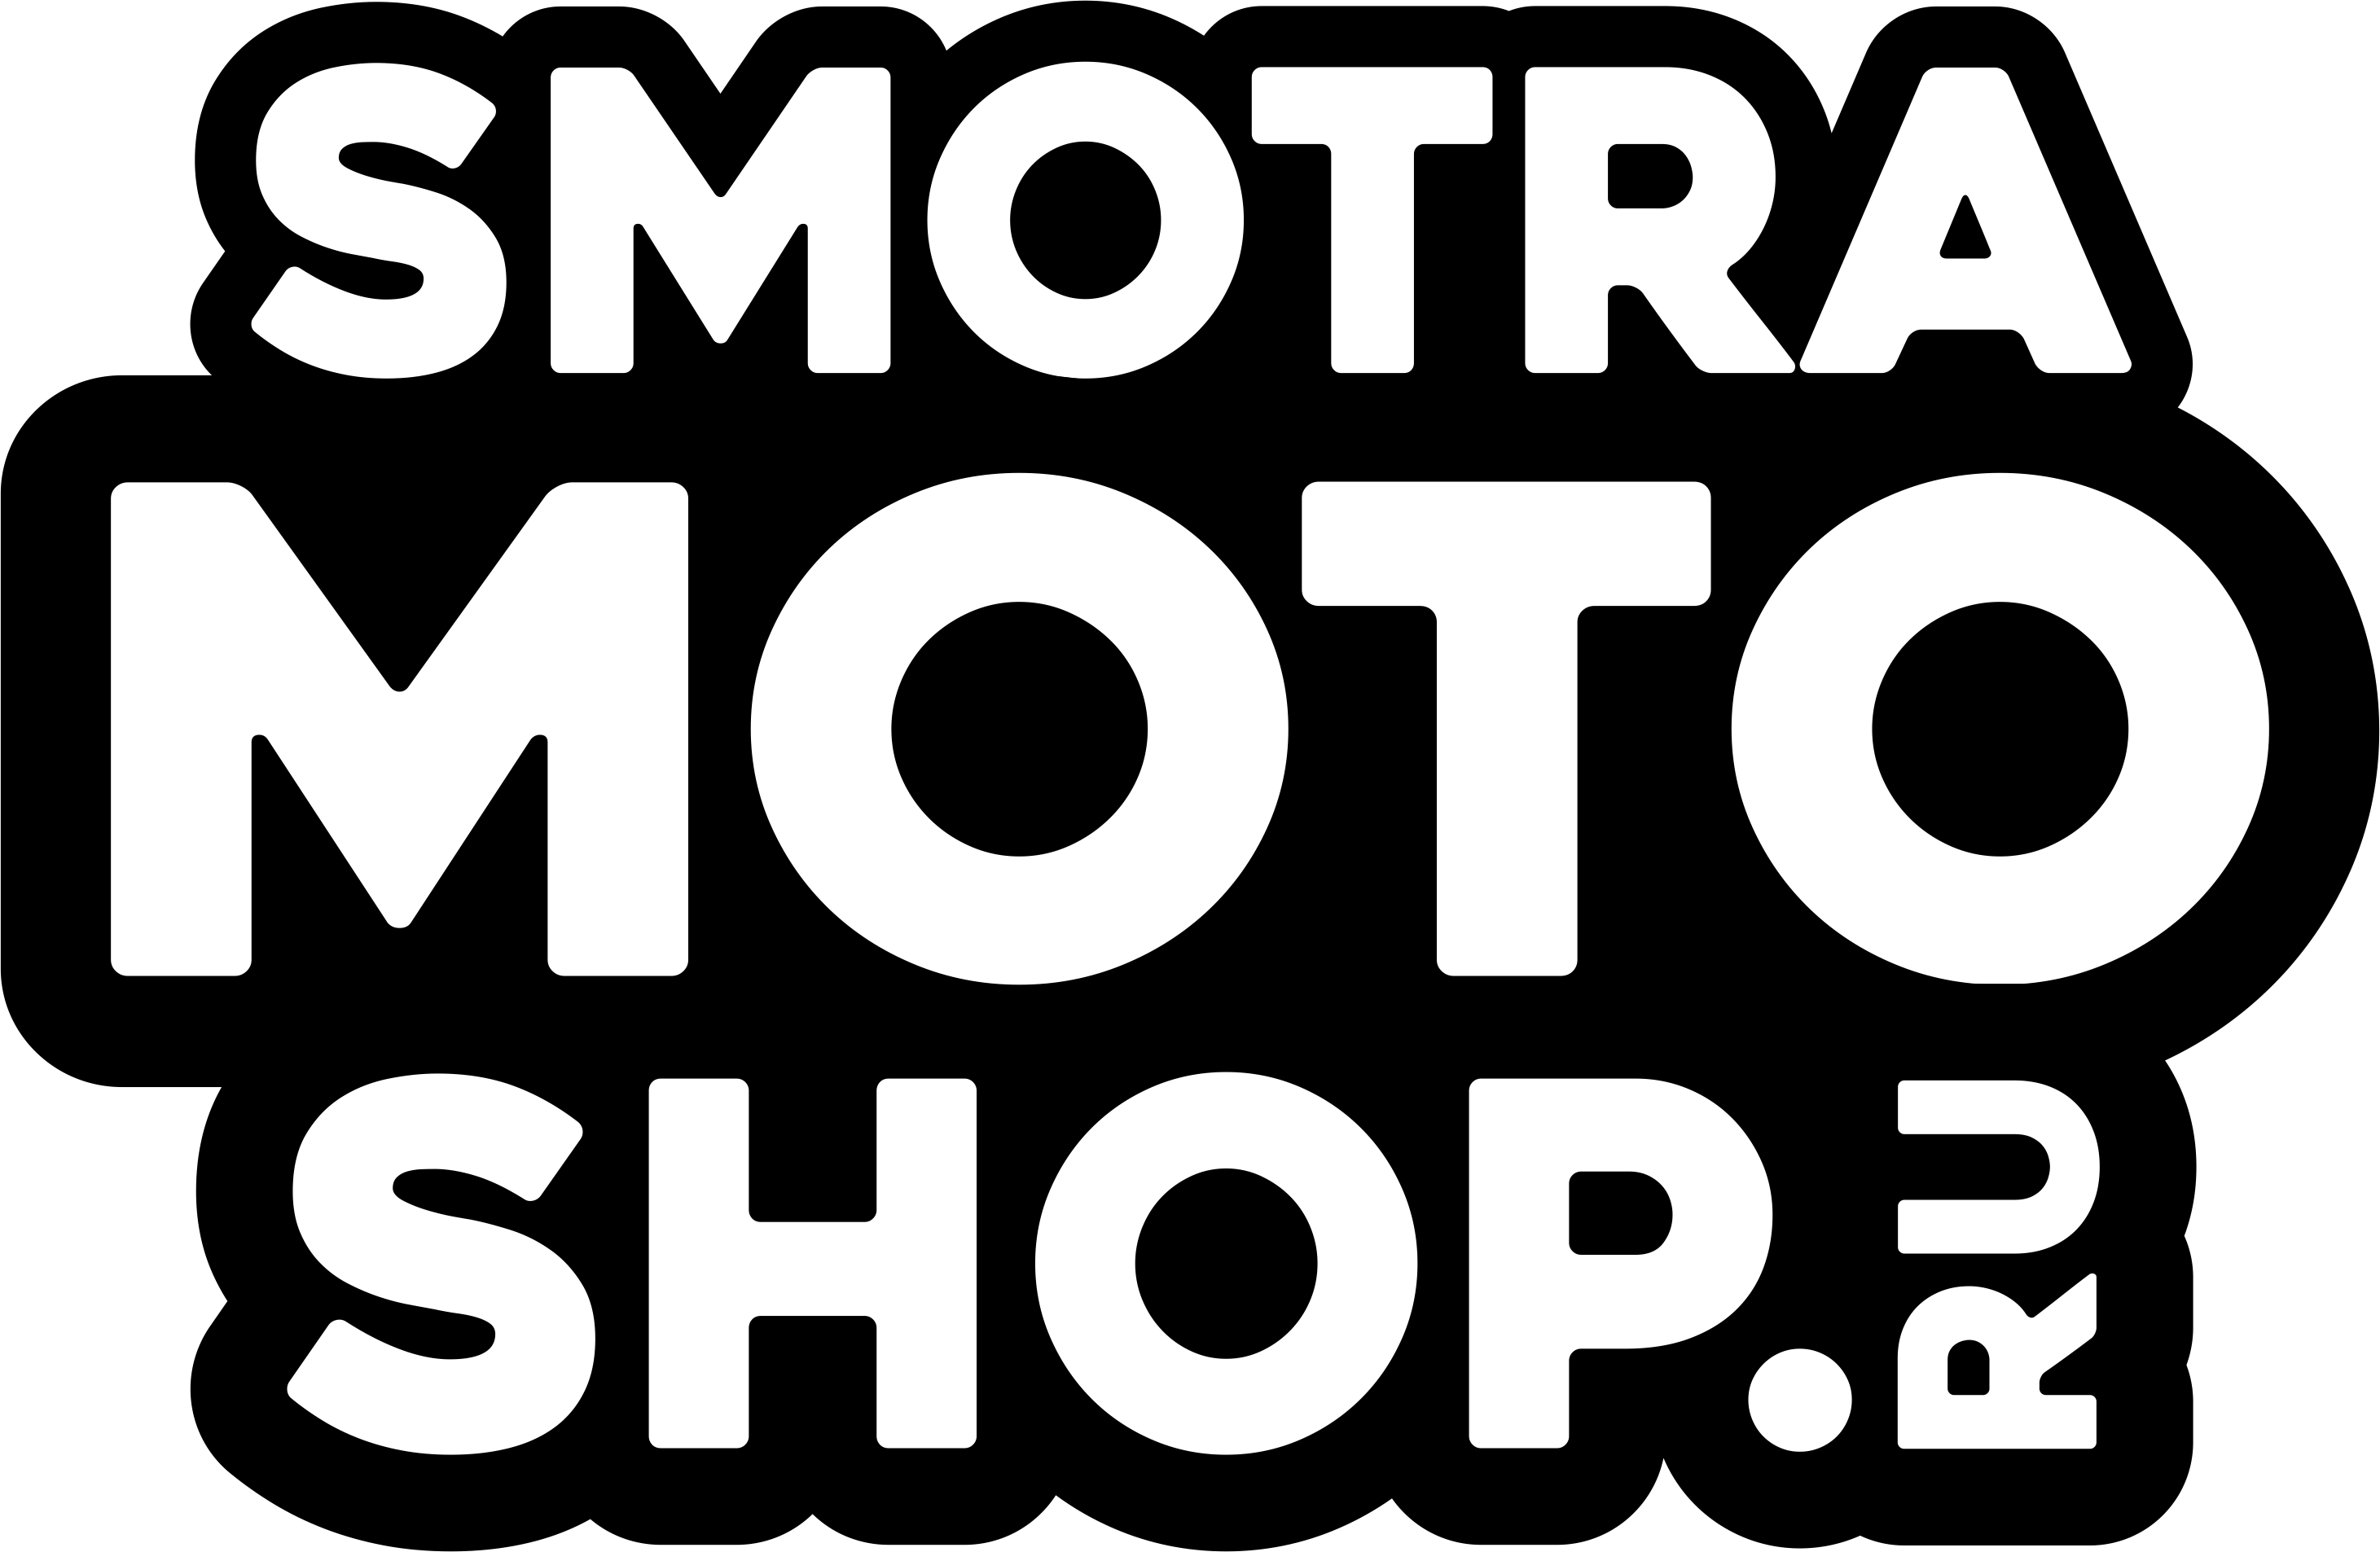 SMOTRA-MOTO-SHOP